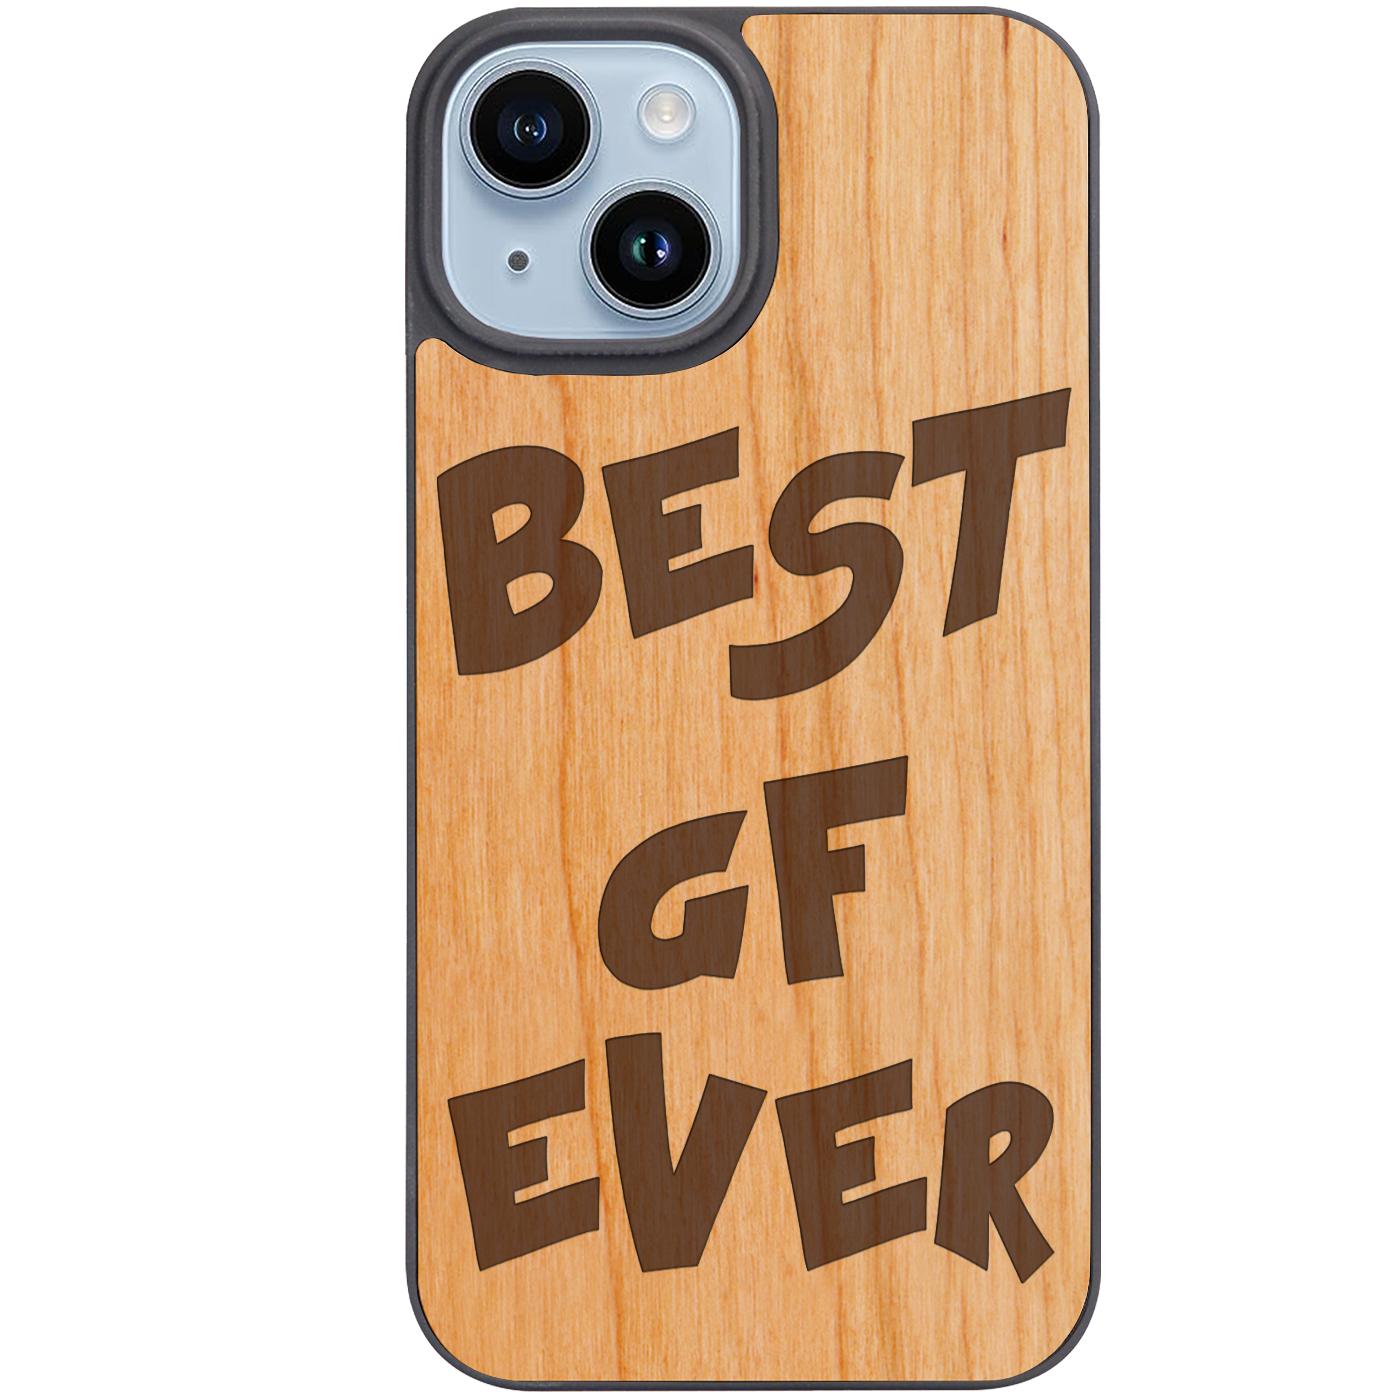 Best Gf Ever - Engraved Phone Case